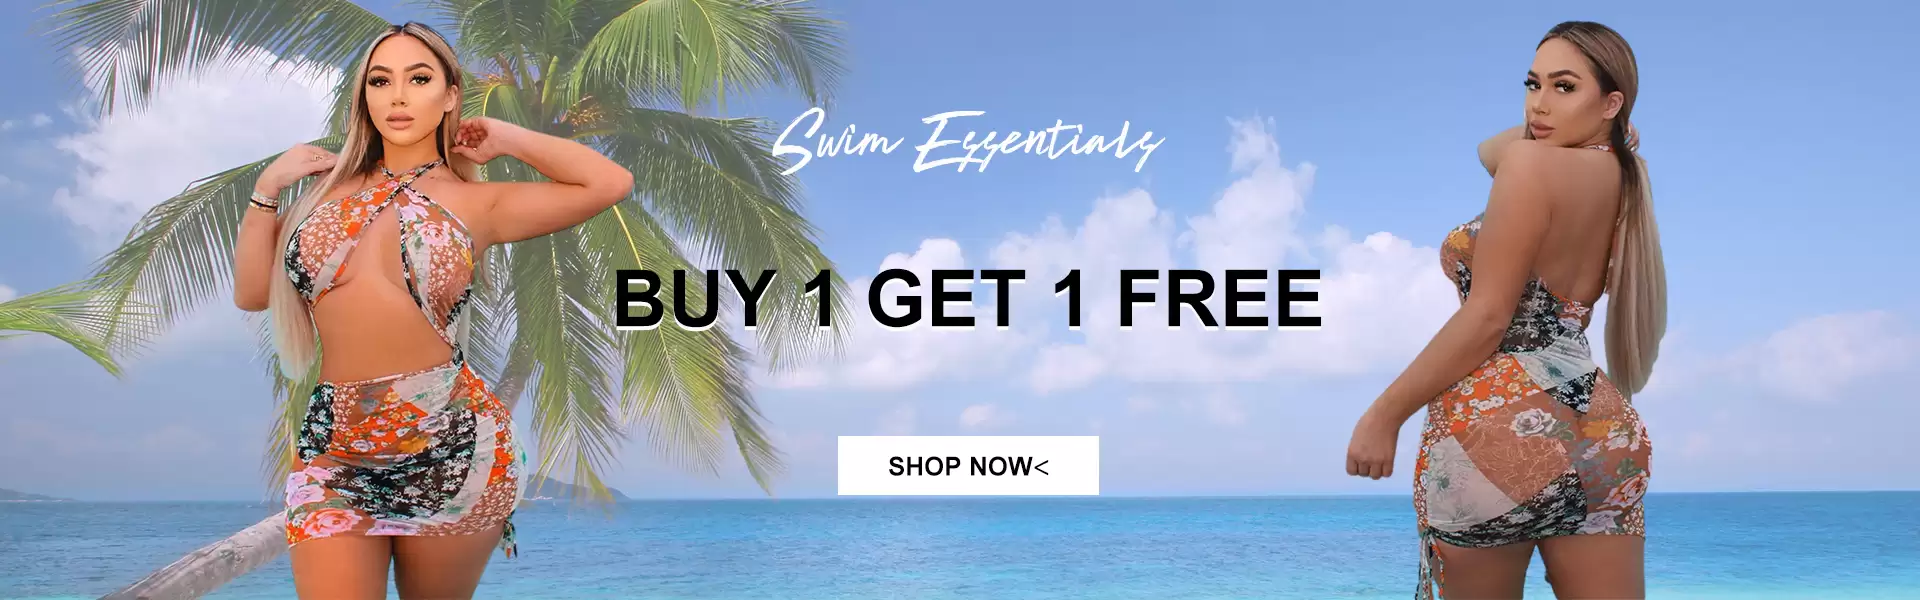 Enjoy Buy 1 Get 1 Free Offer On Swimwear At Jurllyshe.Com Deal Page